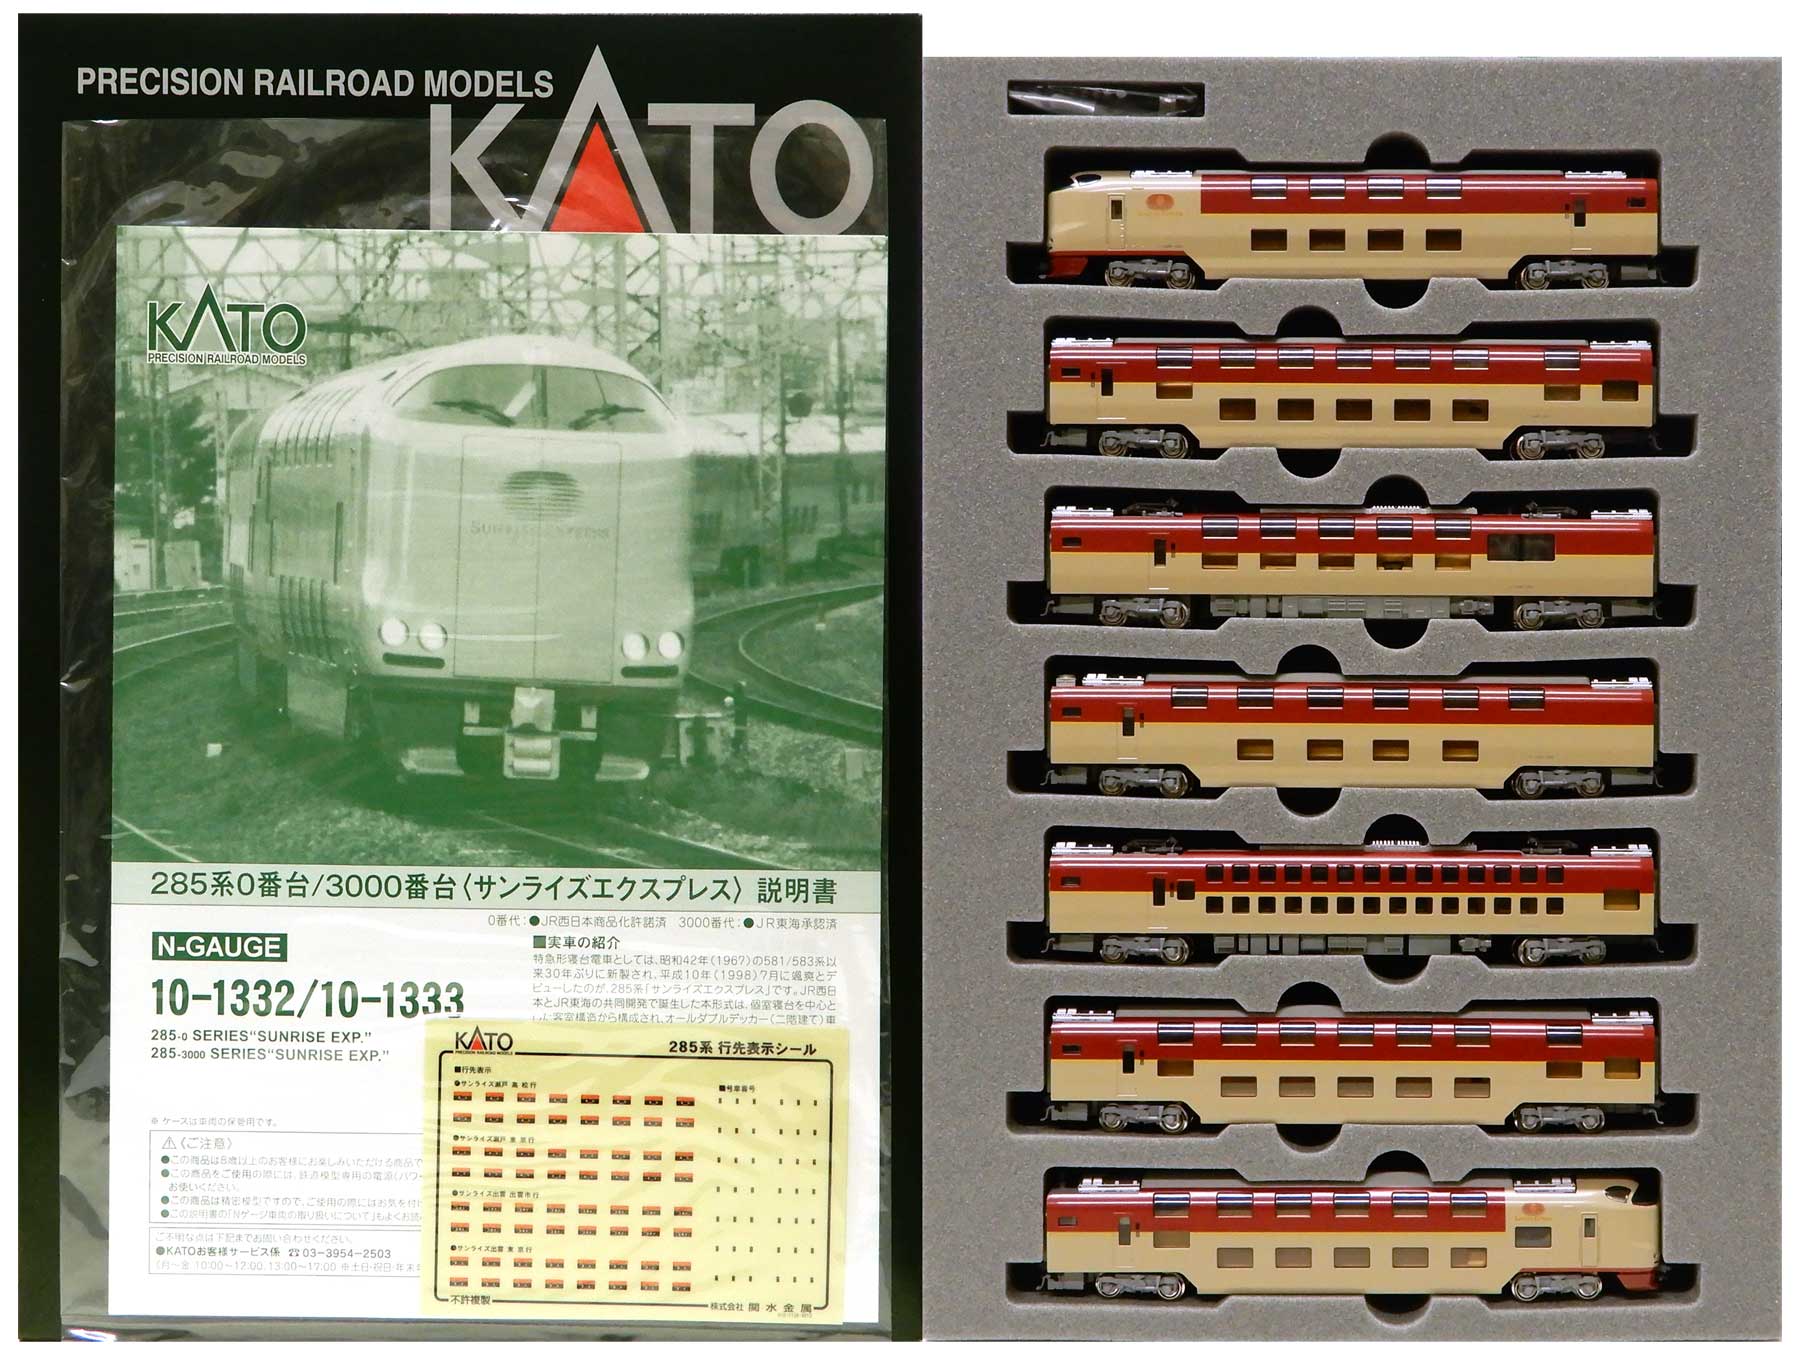 KATO Nゲージ 285系 0番台 サンライズExp 7両セット 10-1332 鉄道模型 ...